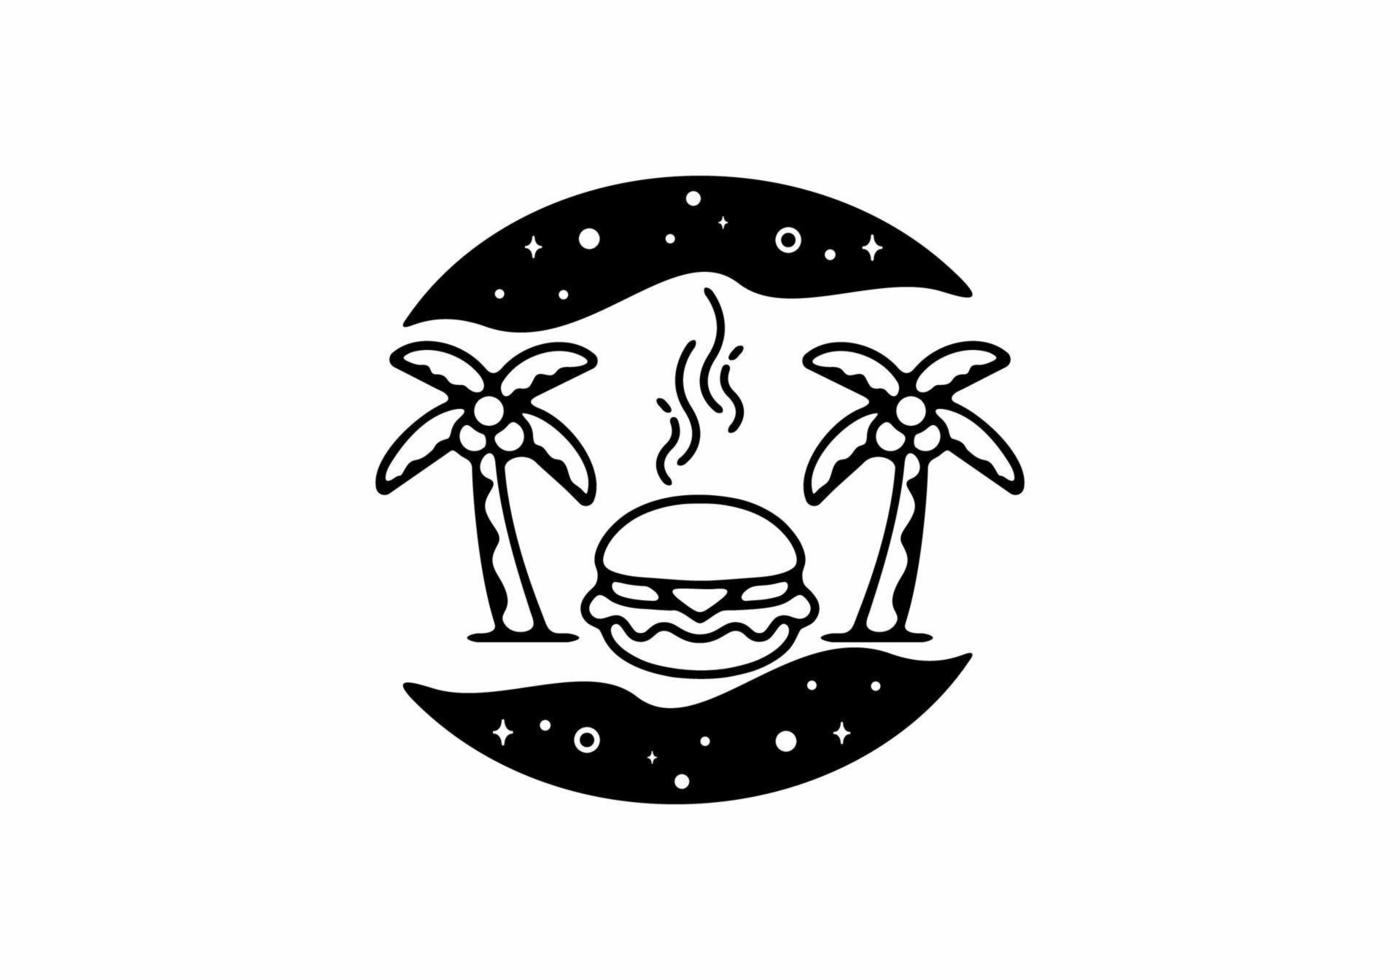 lijntekeningen van hamburger en kokospalmen vector